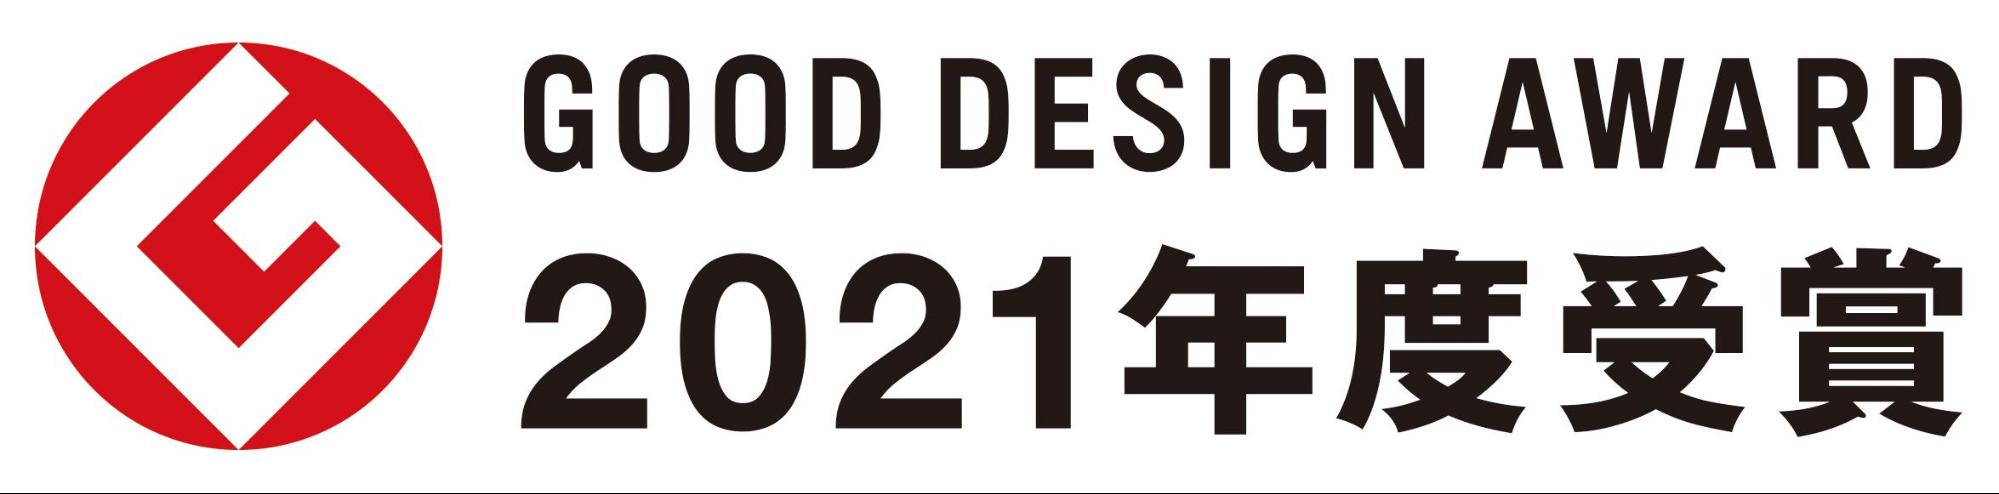 Good design賞2021年度受賞